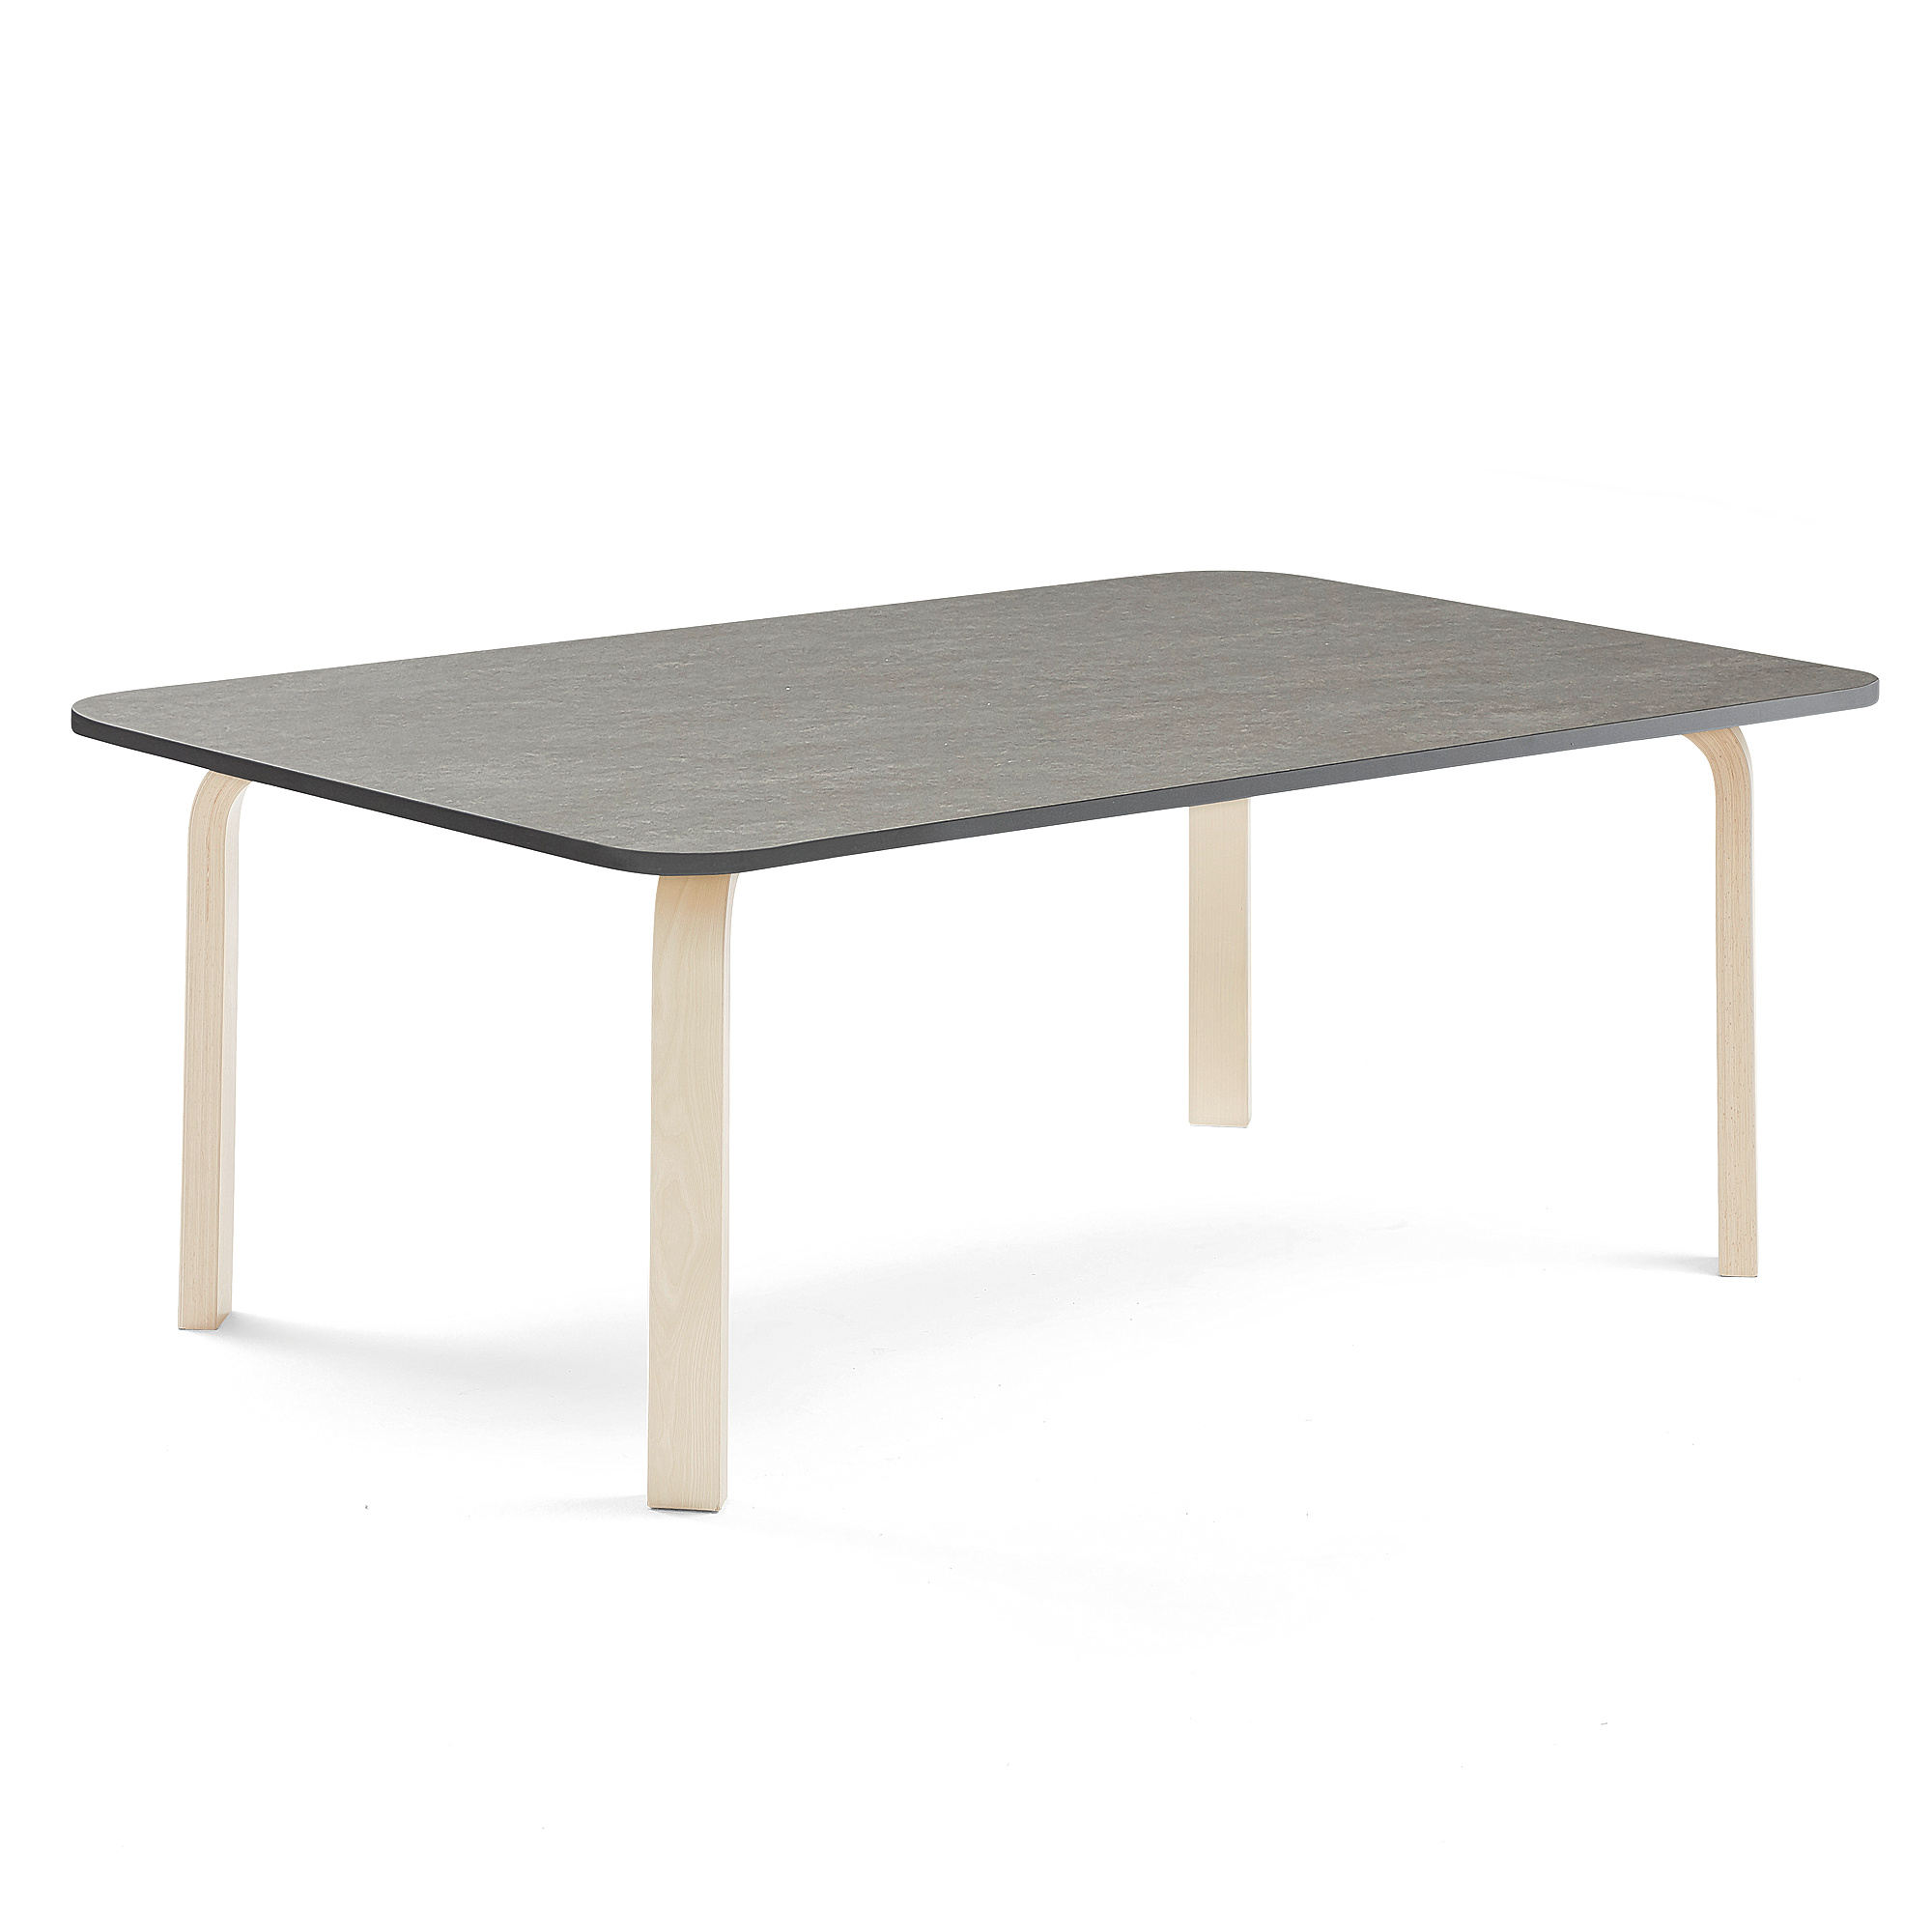 Stůl ELTON, 1800x800x530 mm, bříza, akustické linoleum, tmavě šedá